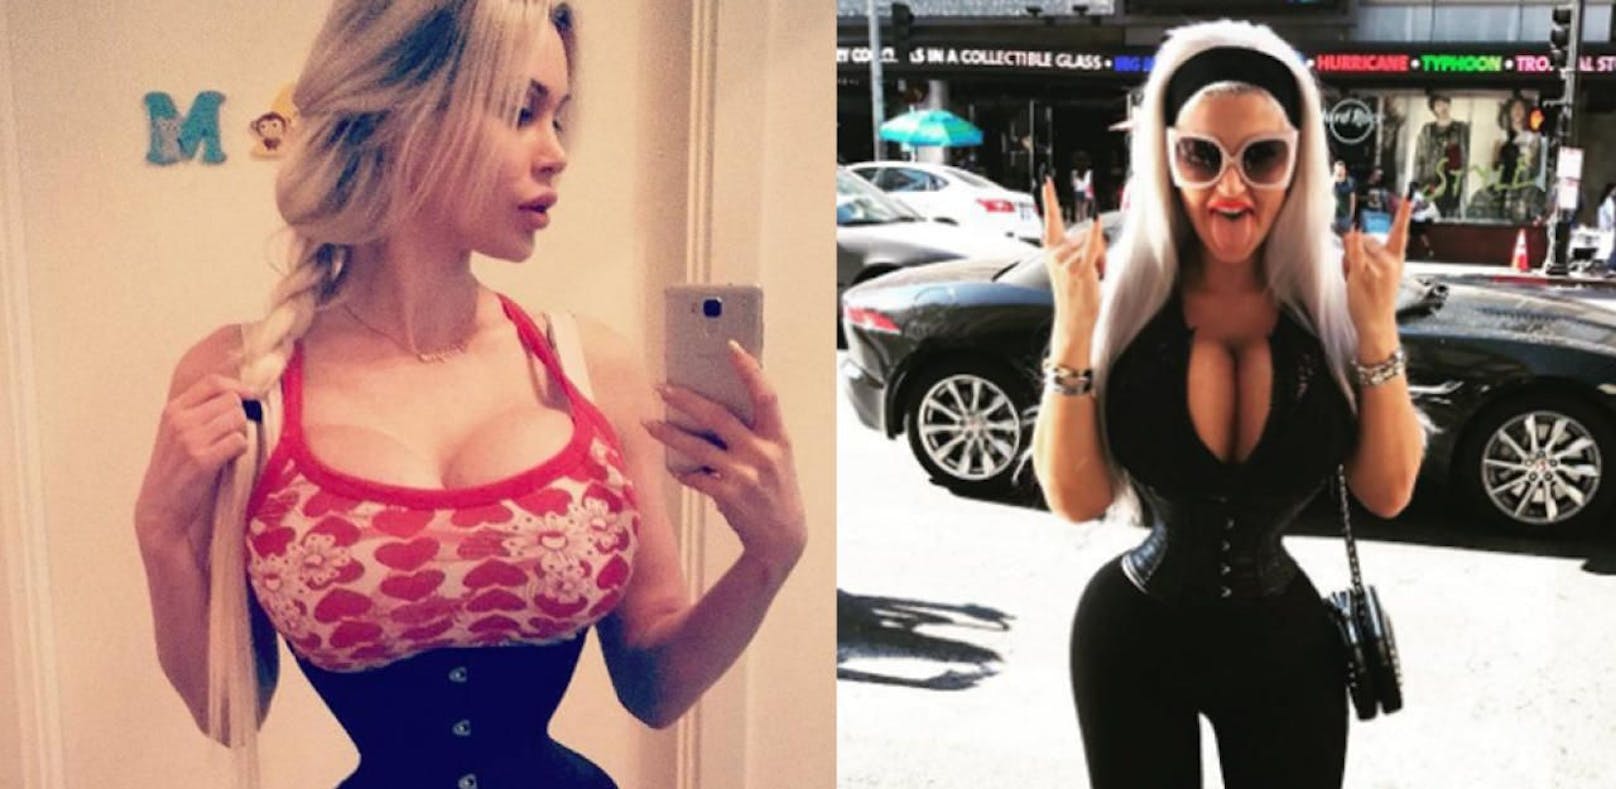 Sophia vs. Pixee: Wer hat die schlankere Taille?